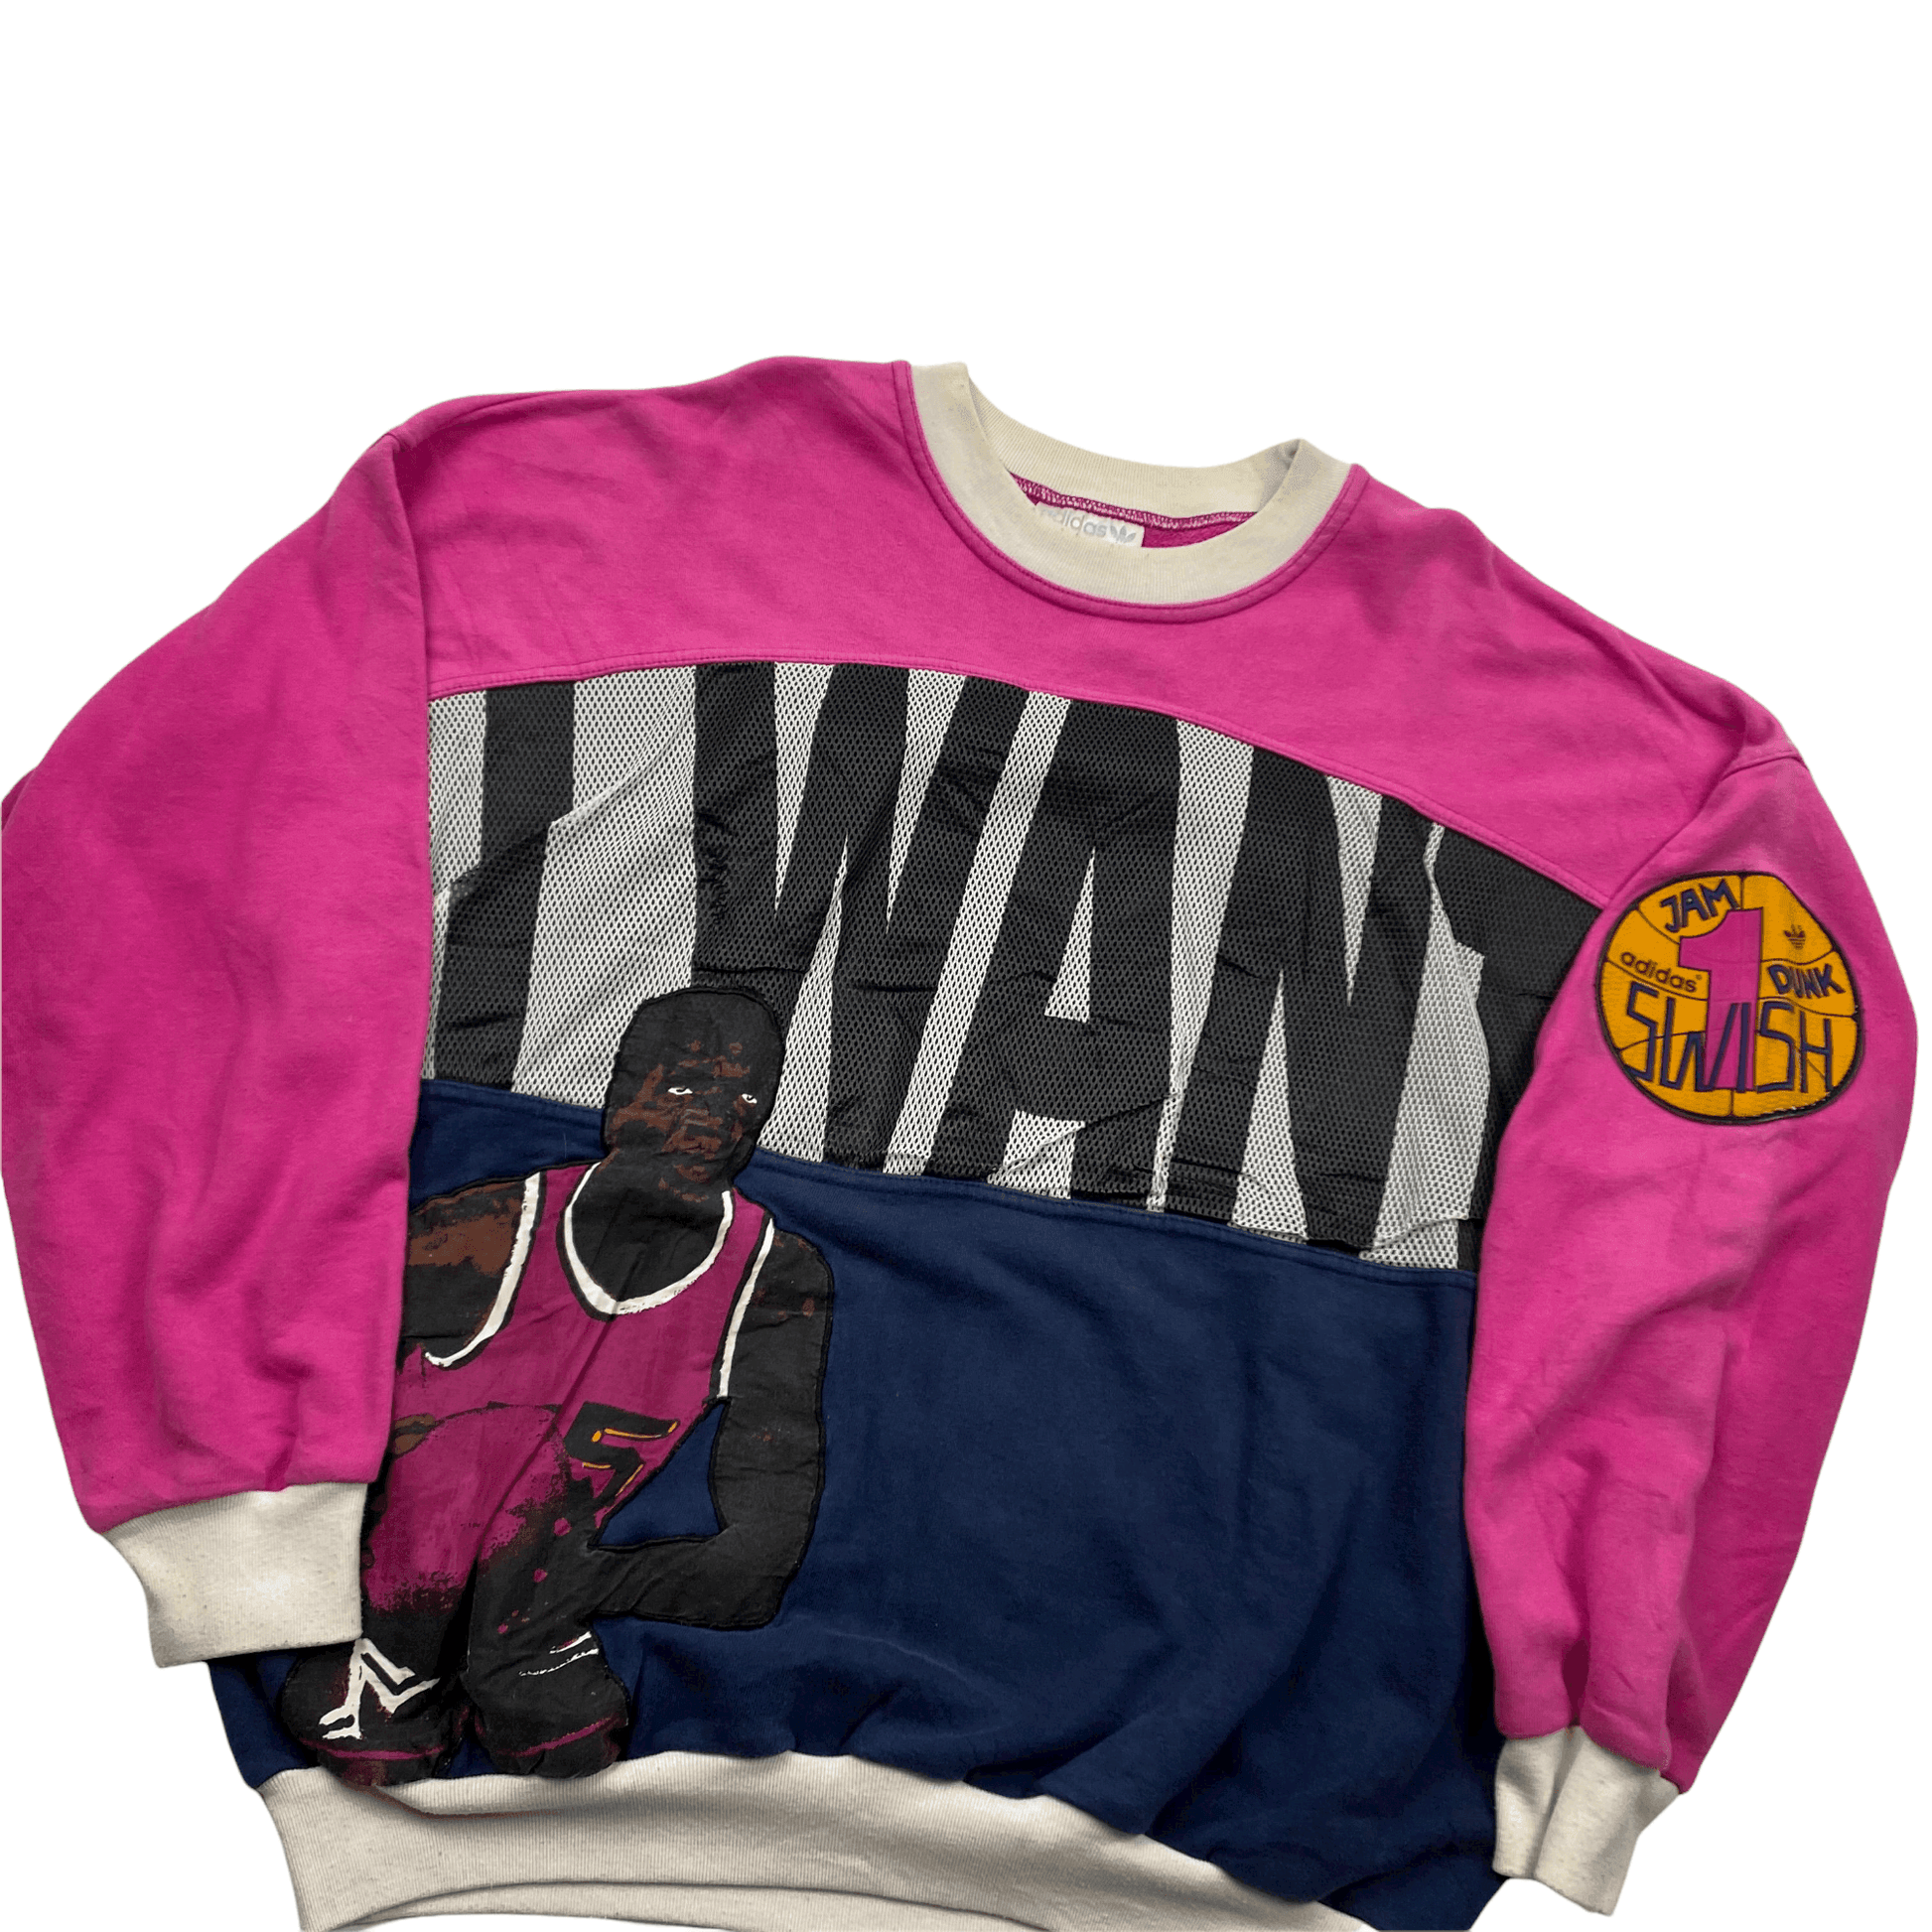 Vintage 90s Purple + Navy Blue Adidas "I Want I Can" Sweatshirt - Medium - The Streetwear Studio